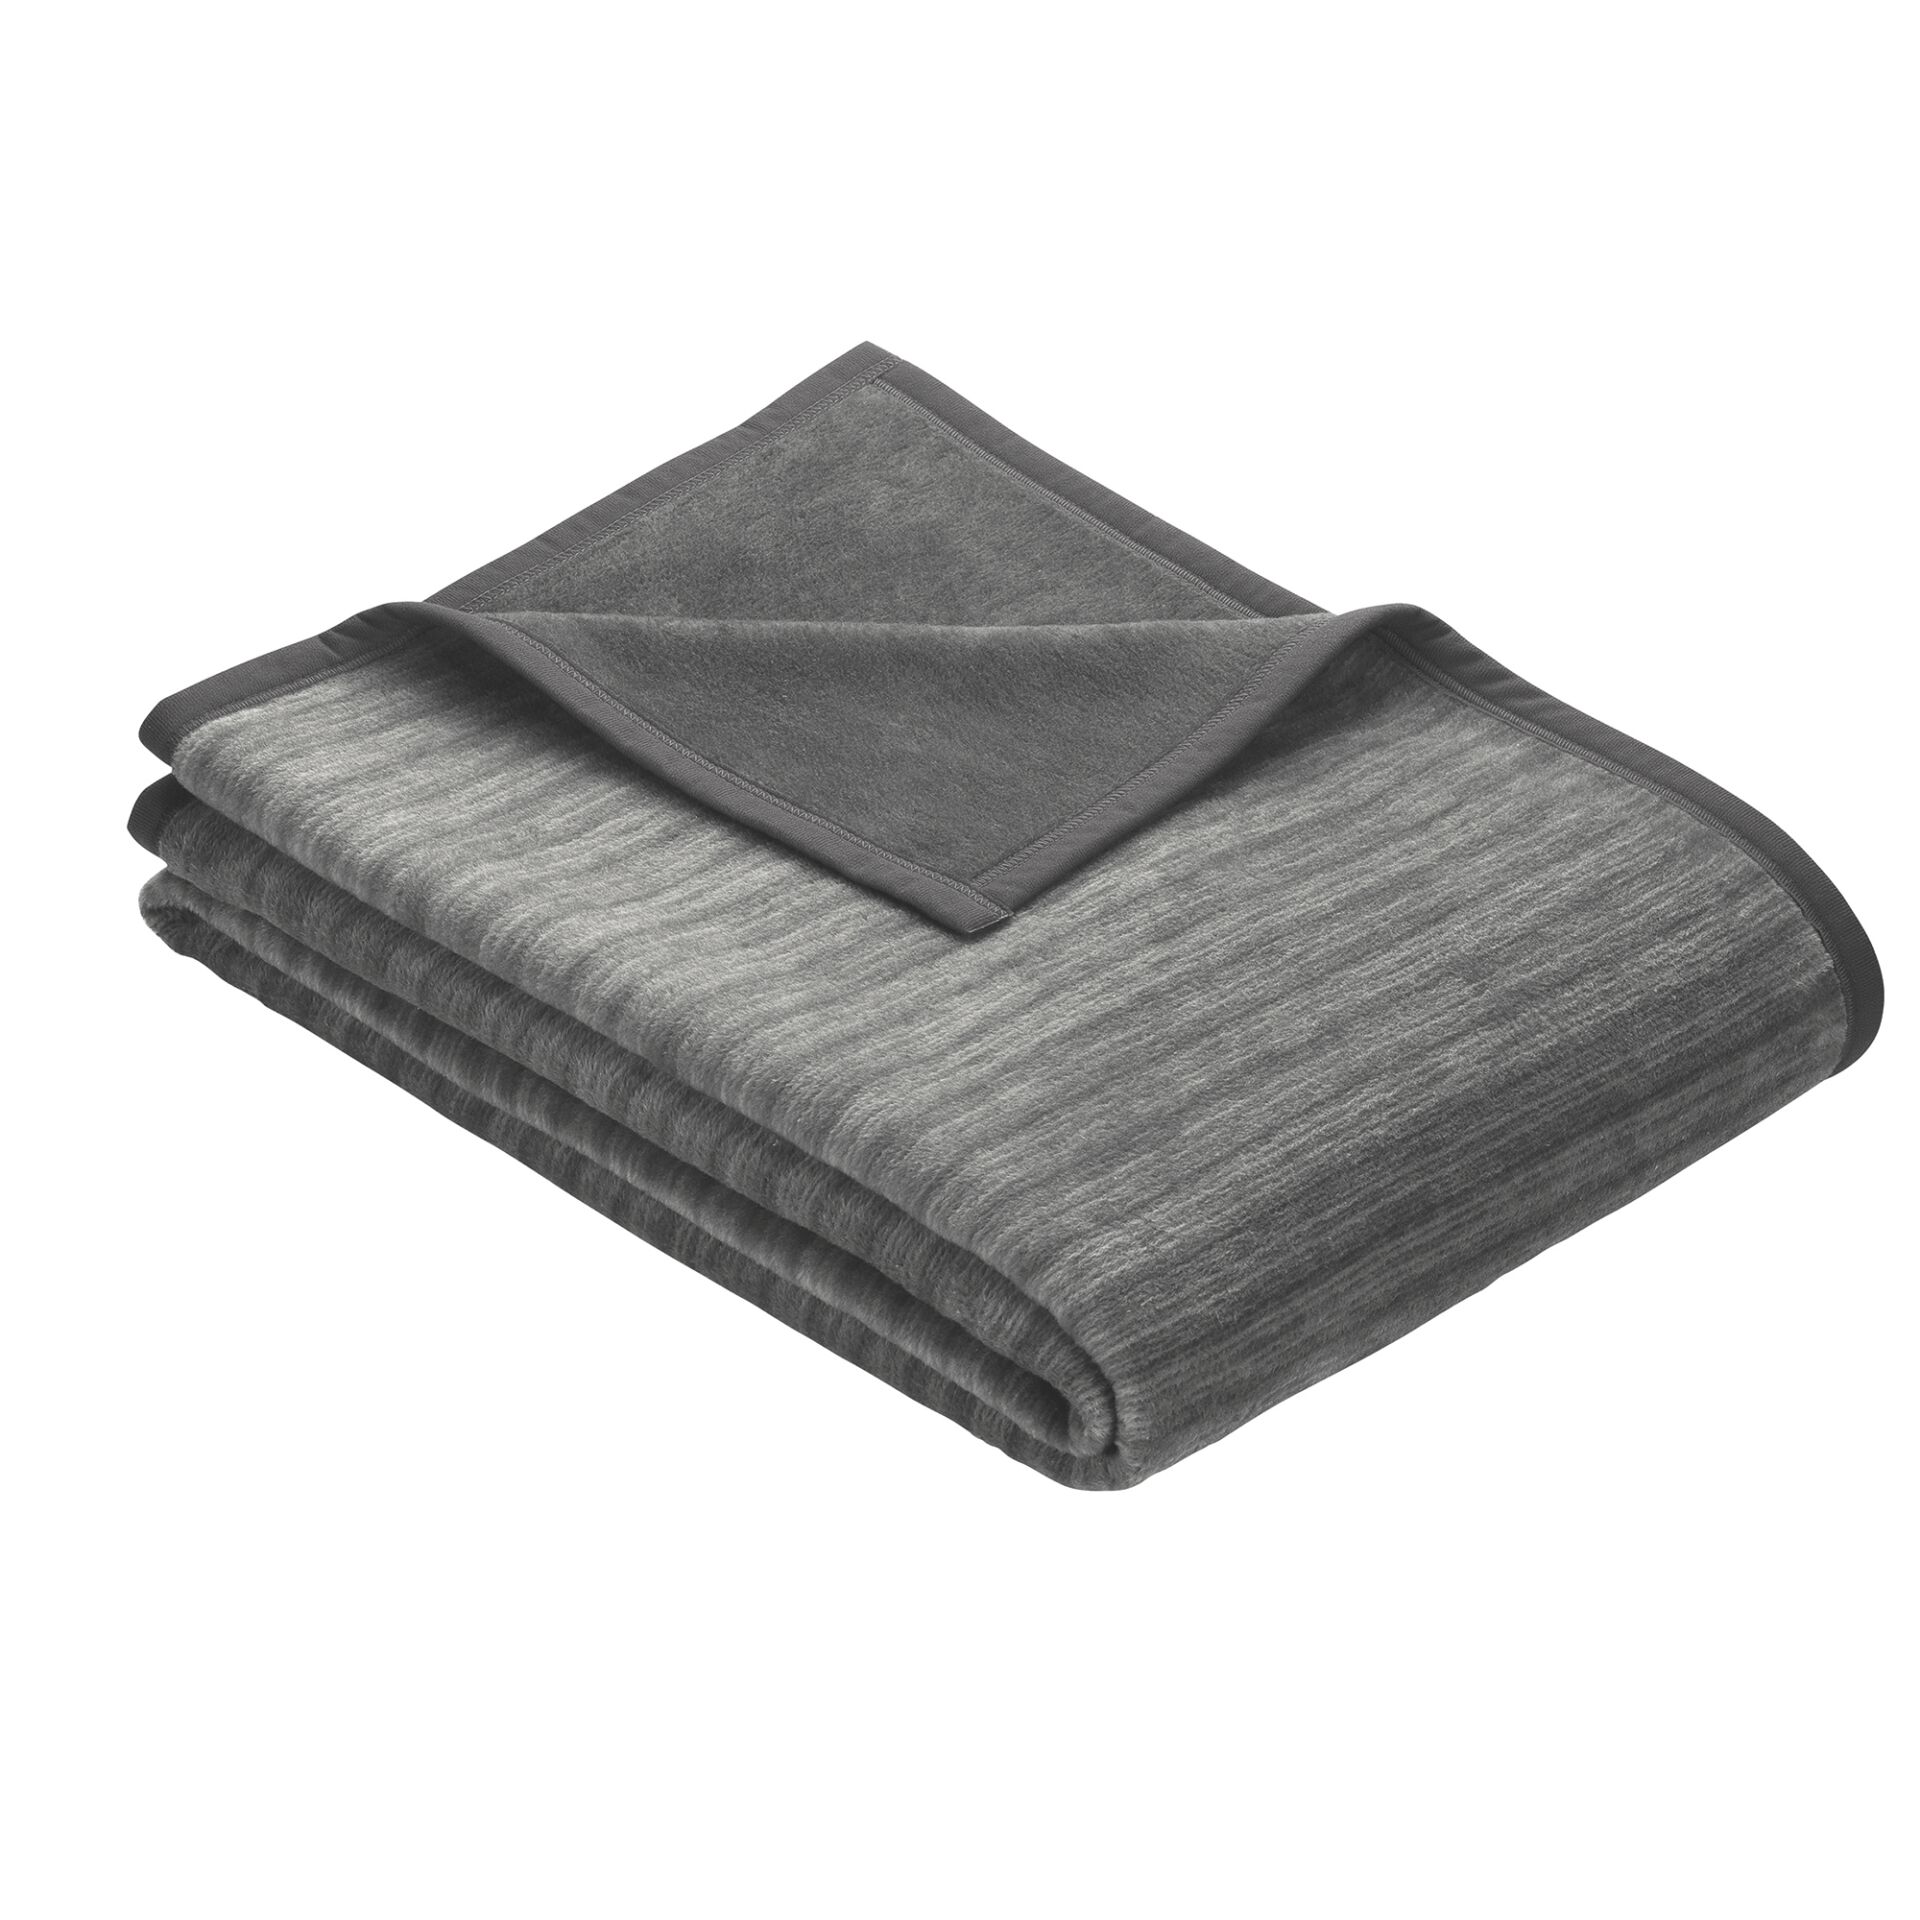 Ibena Jacquard Blanket Fano anthracite 800, 150x200